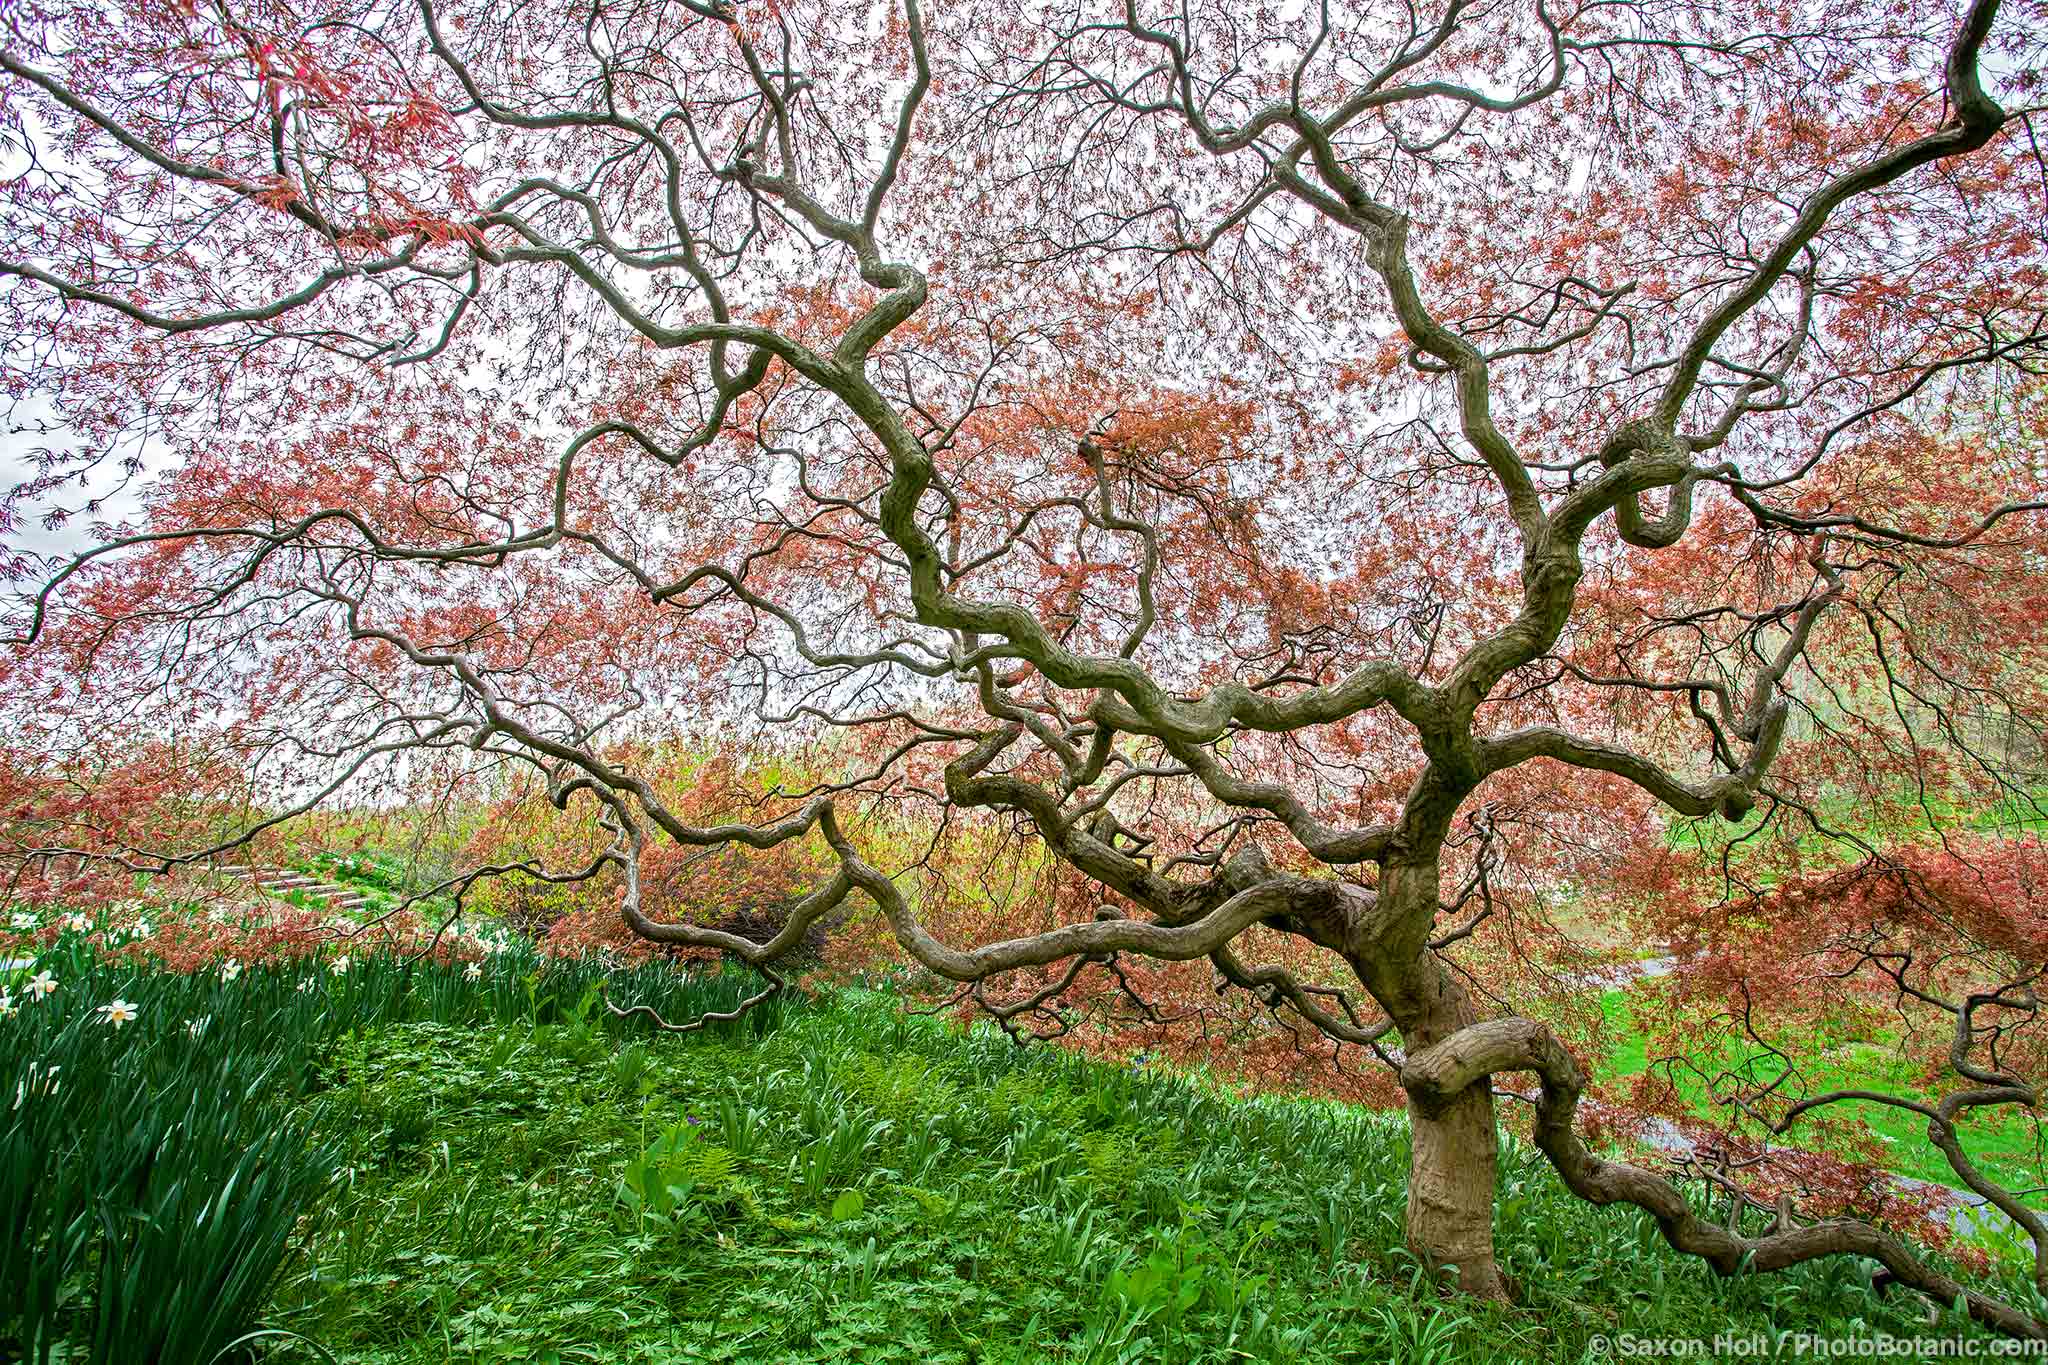 Acer palmatum dissectum atropurpureum, Red Cutleaf Japanese Maple tree, spring leaves unfolding, Winterthur Garden